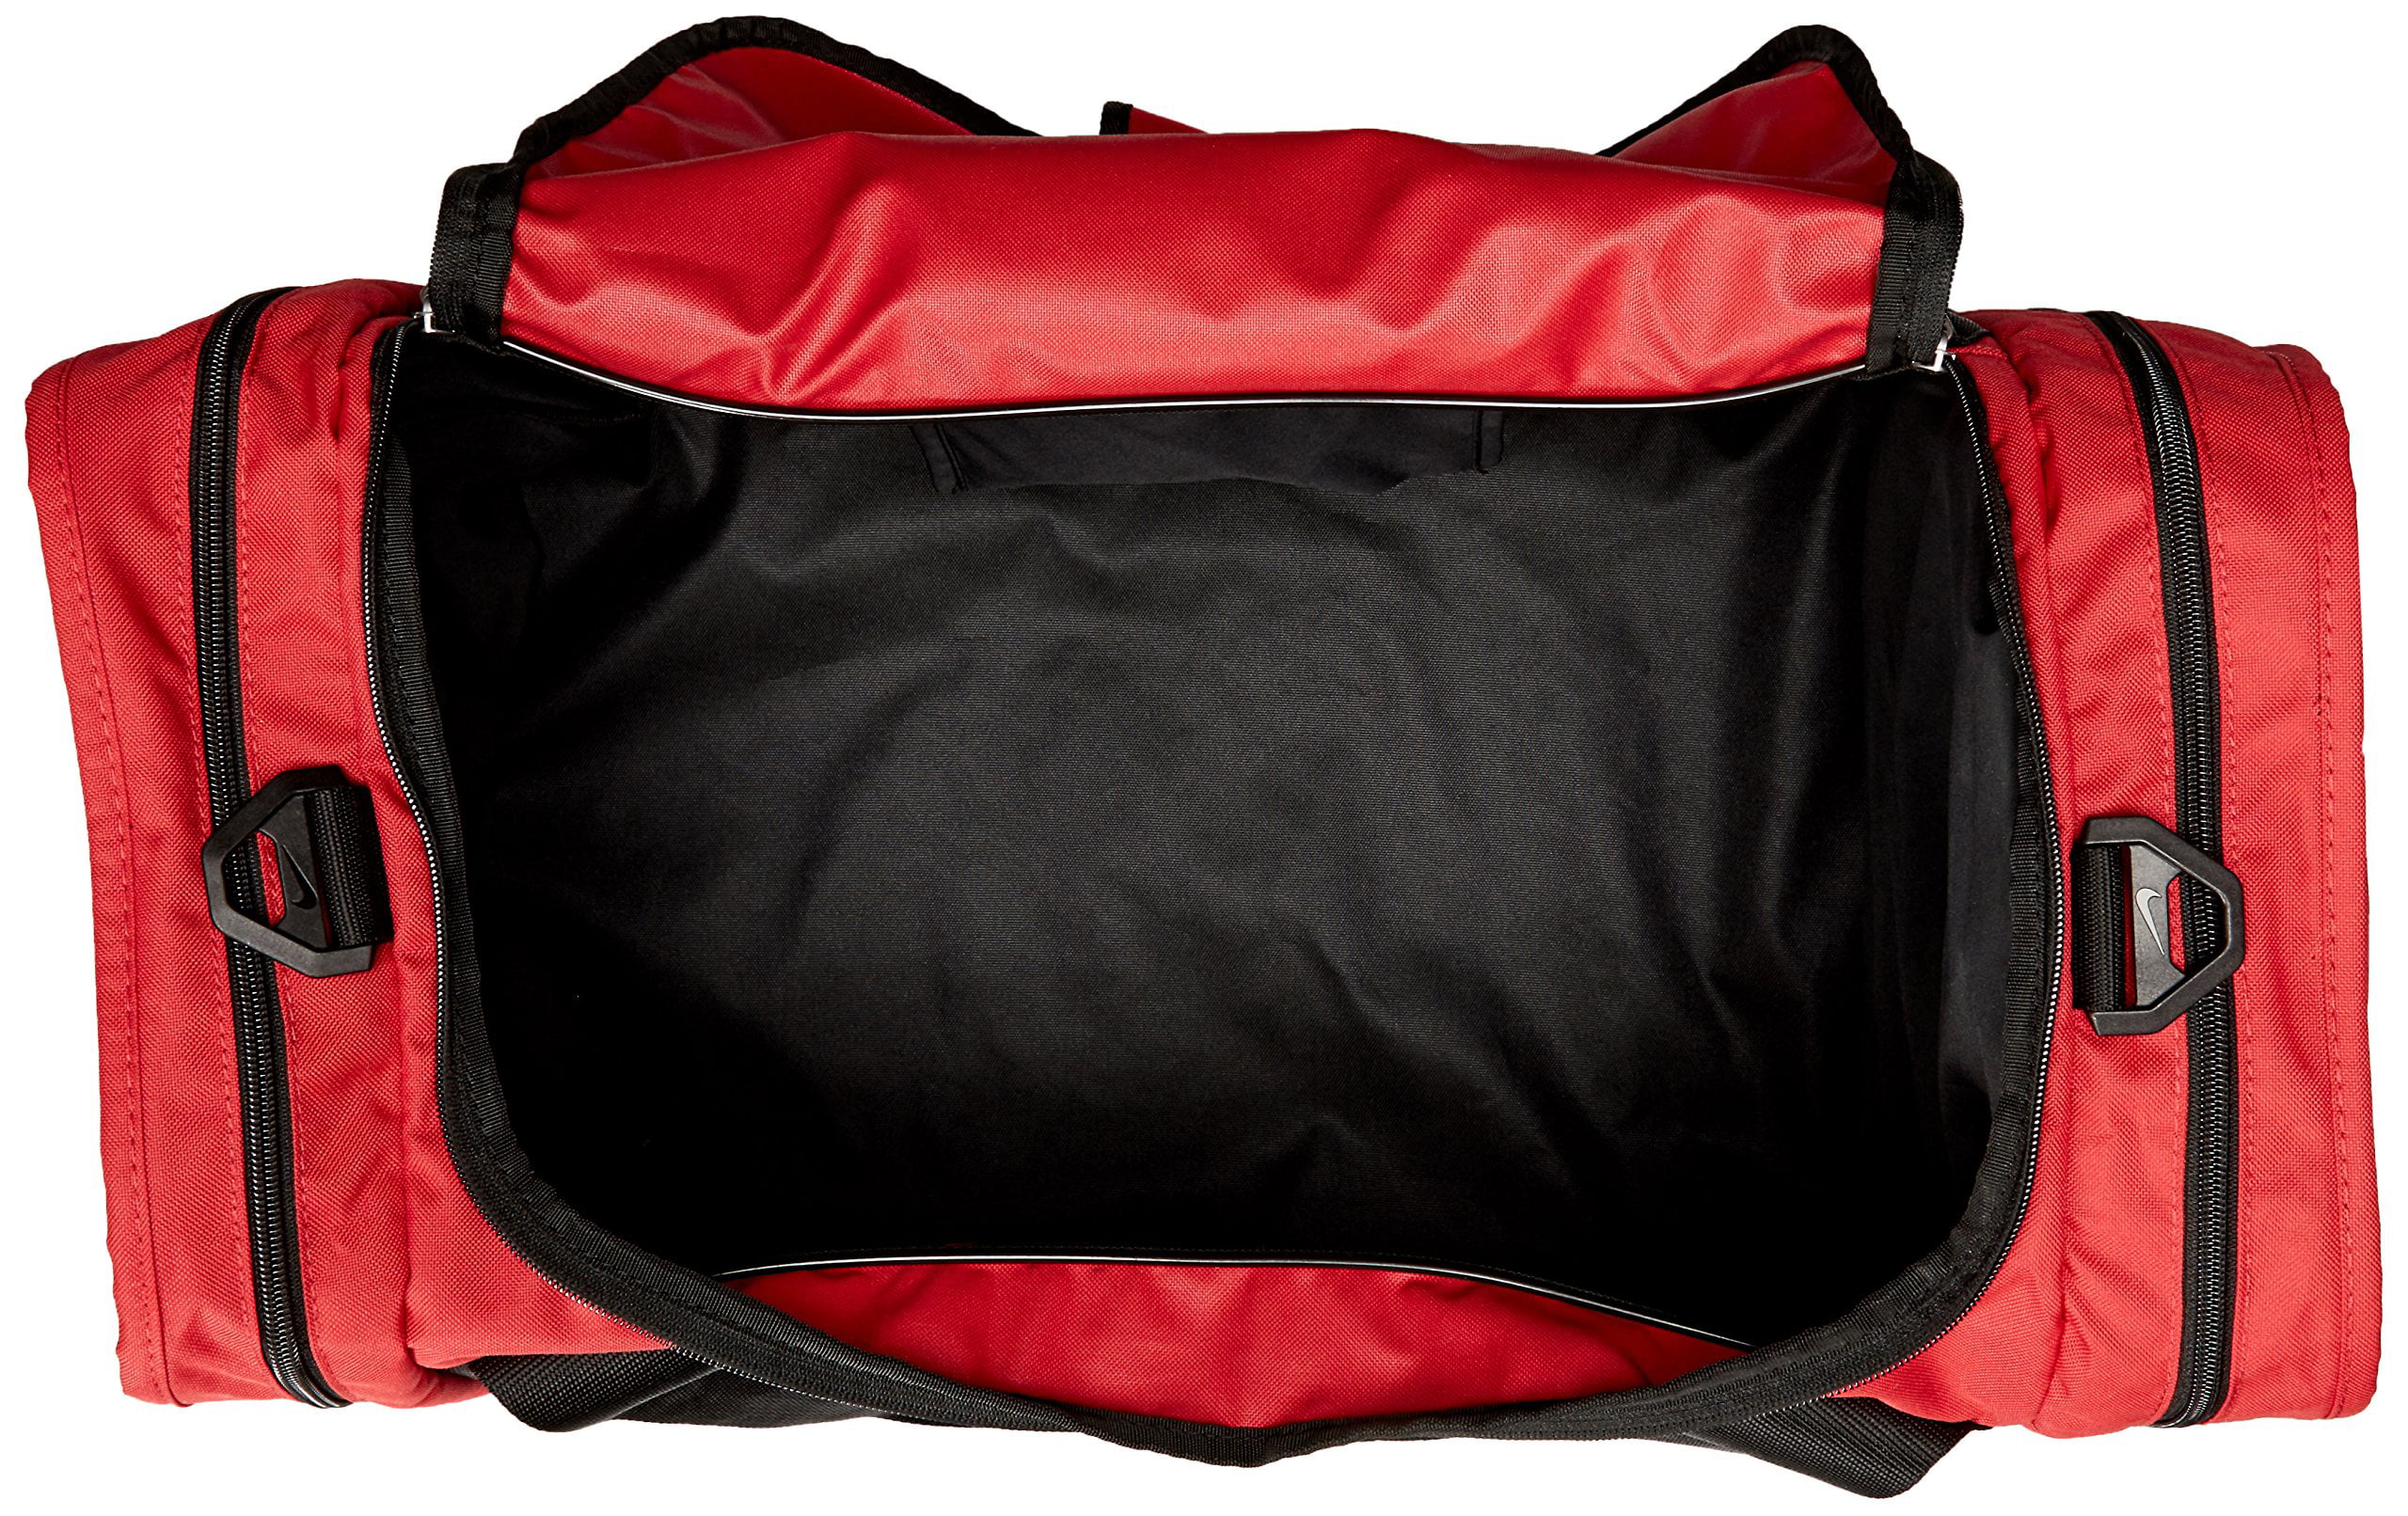 arquitecto Arturo circuito Nike Brasilia 6 Duffel Bag (Gym Red/Black/White, Medium) - Walmart.com